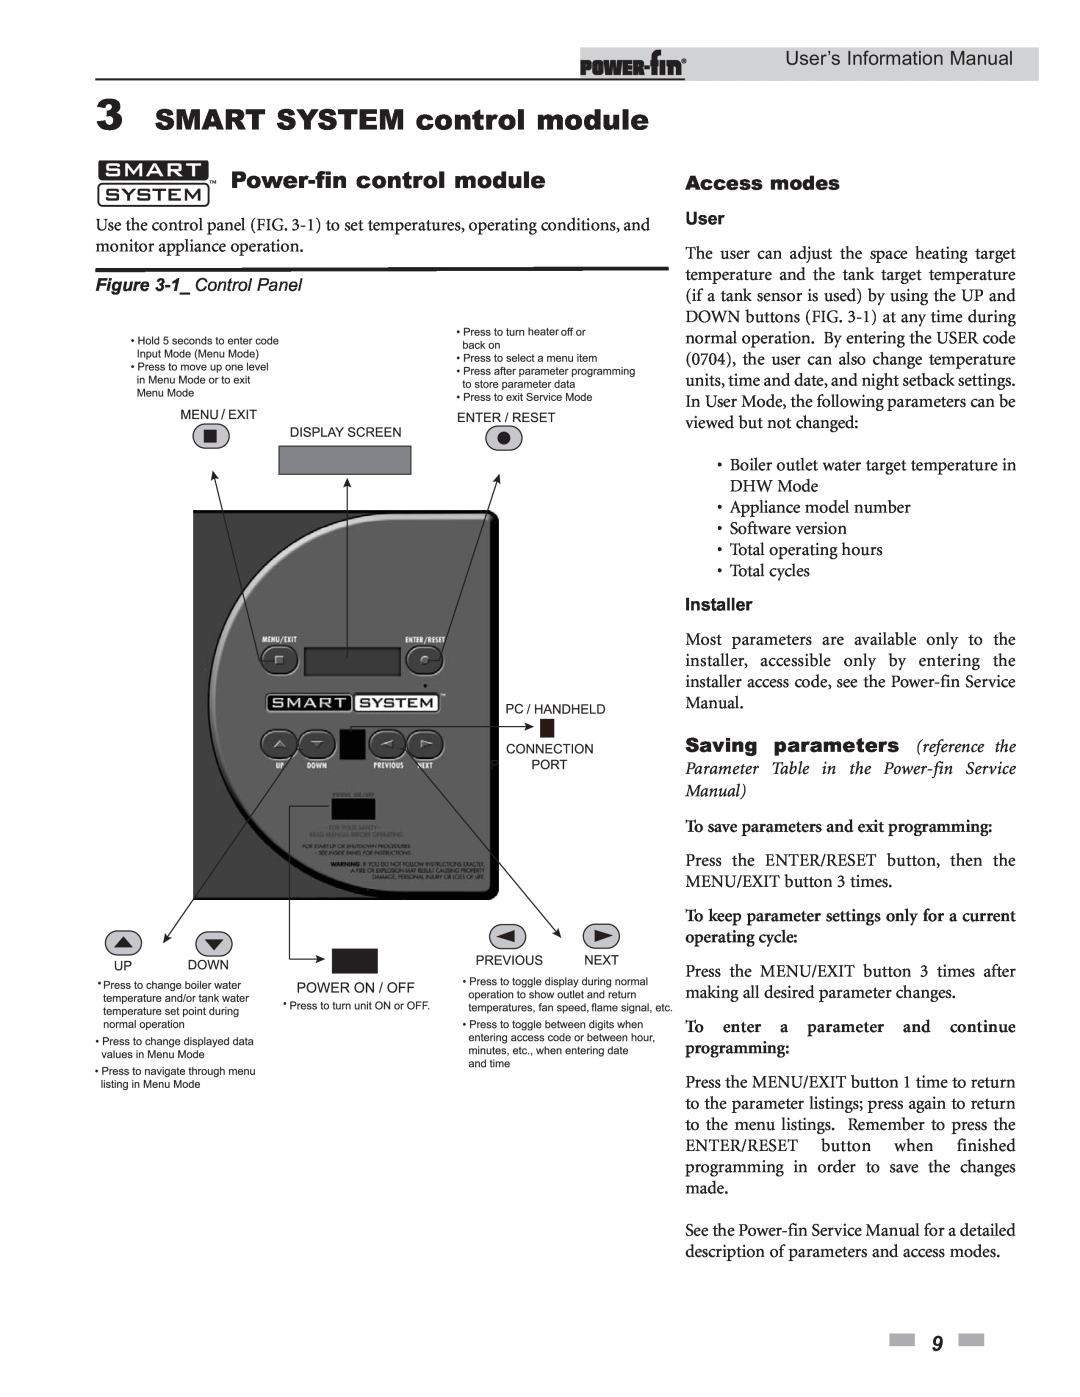 Lochinvar 2001, 502, 752, 1701, 1302 3SMART SYSTEM control module, Power-fincontrol module, Access modes, 1 Control Panel 